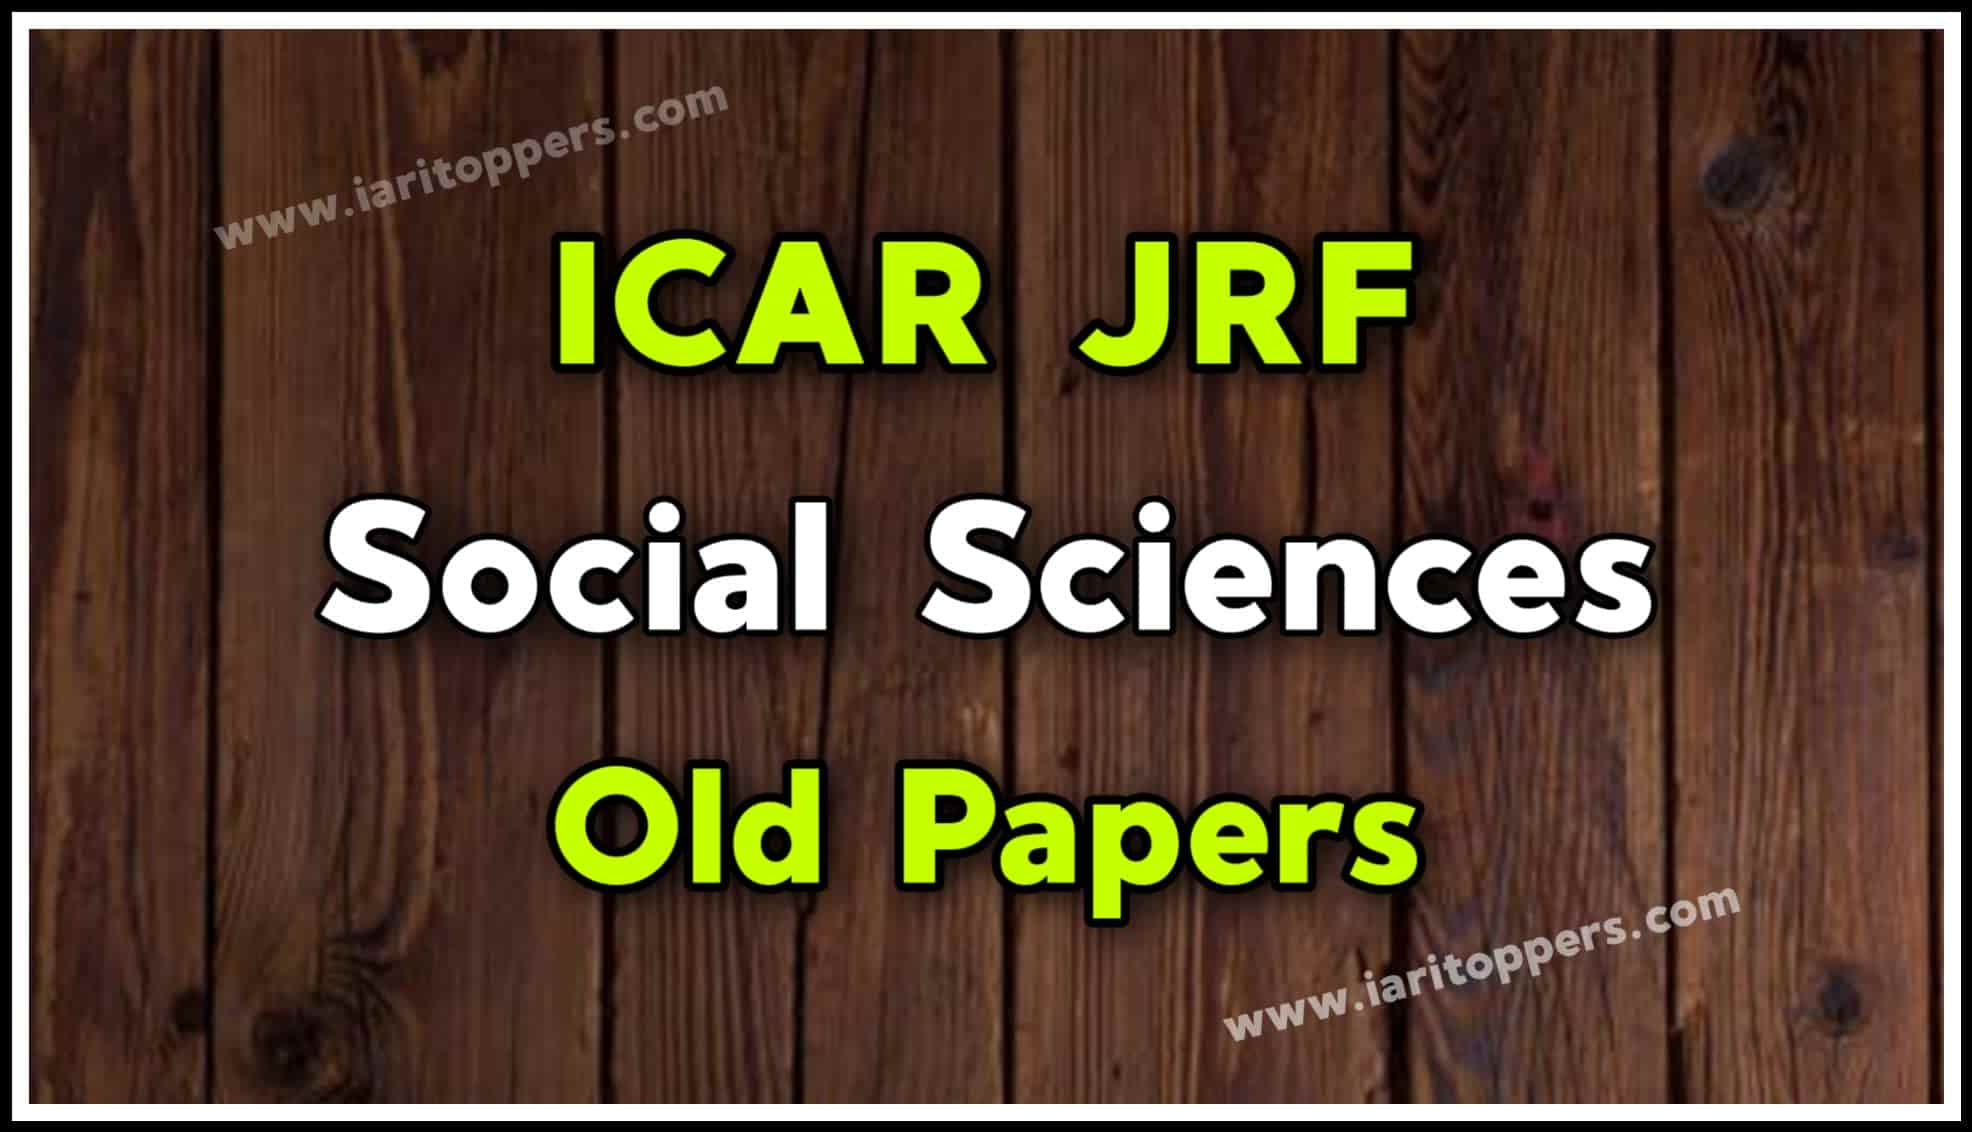 ICAR JRF Social Sciences Old Papers PDF Download